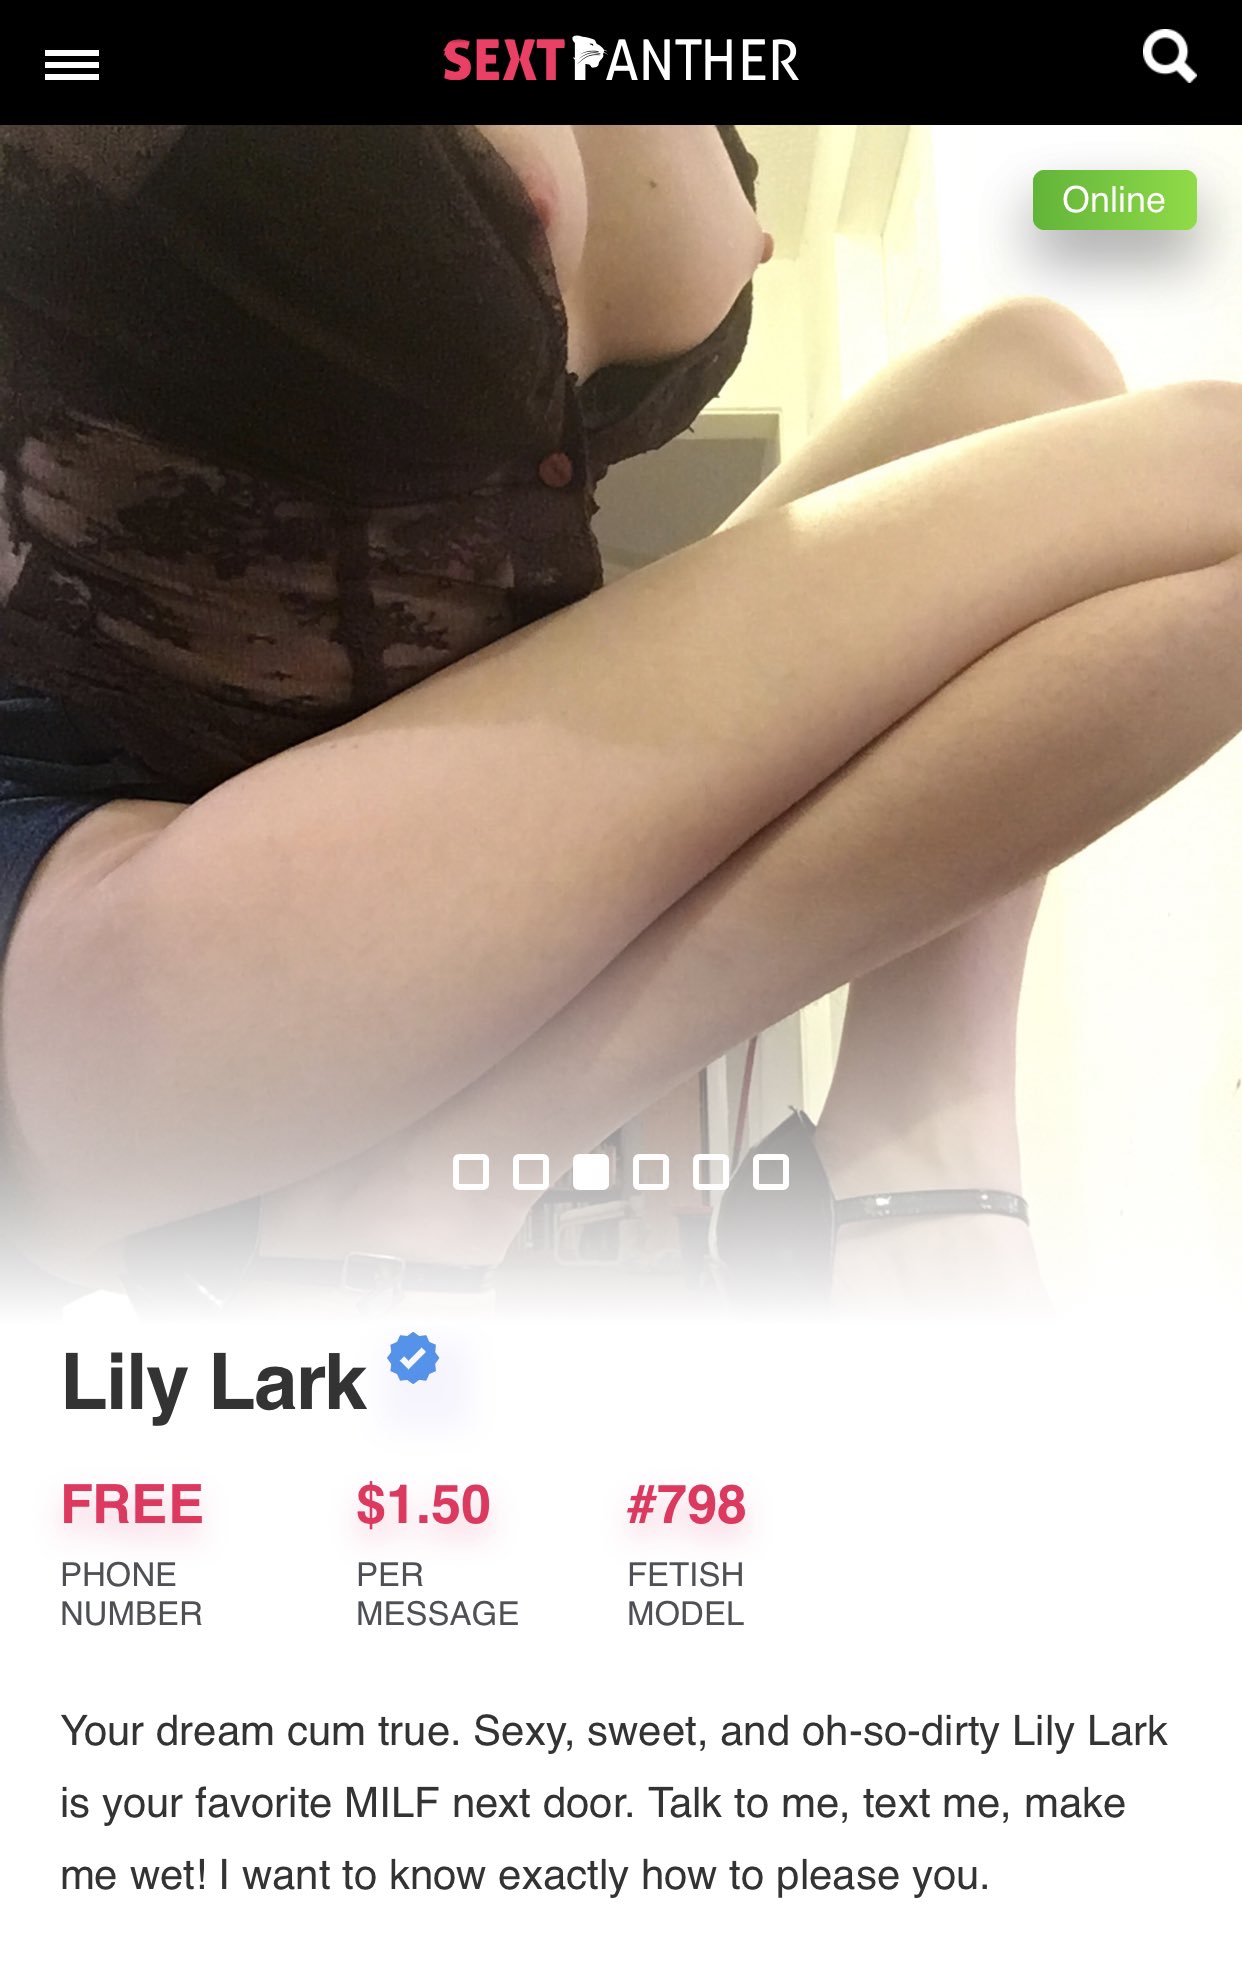 TW Pornstars - Lily Lark. Twitter pic